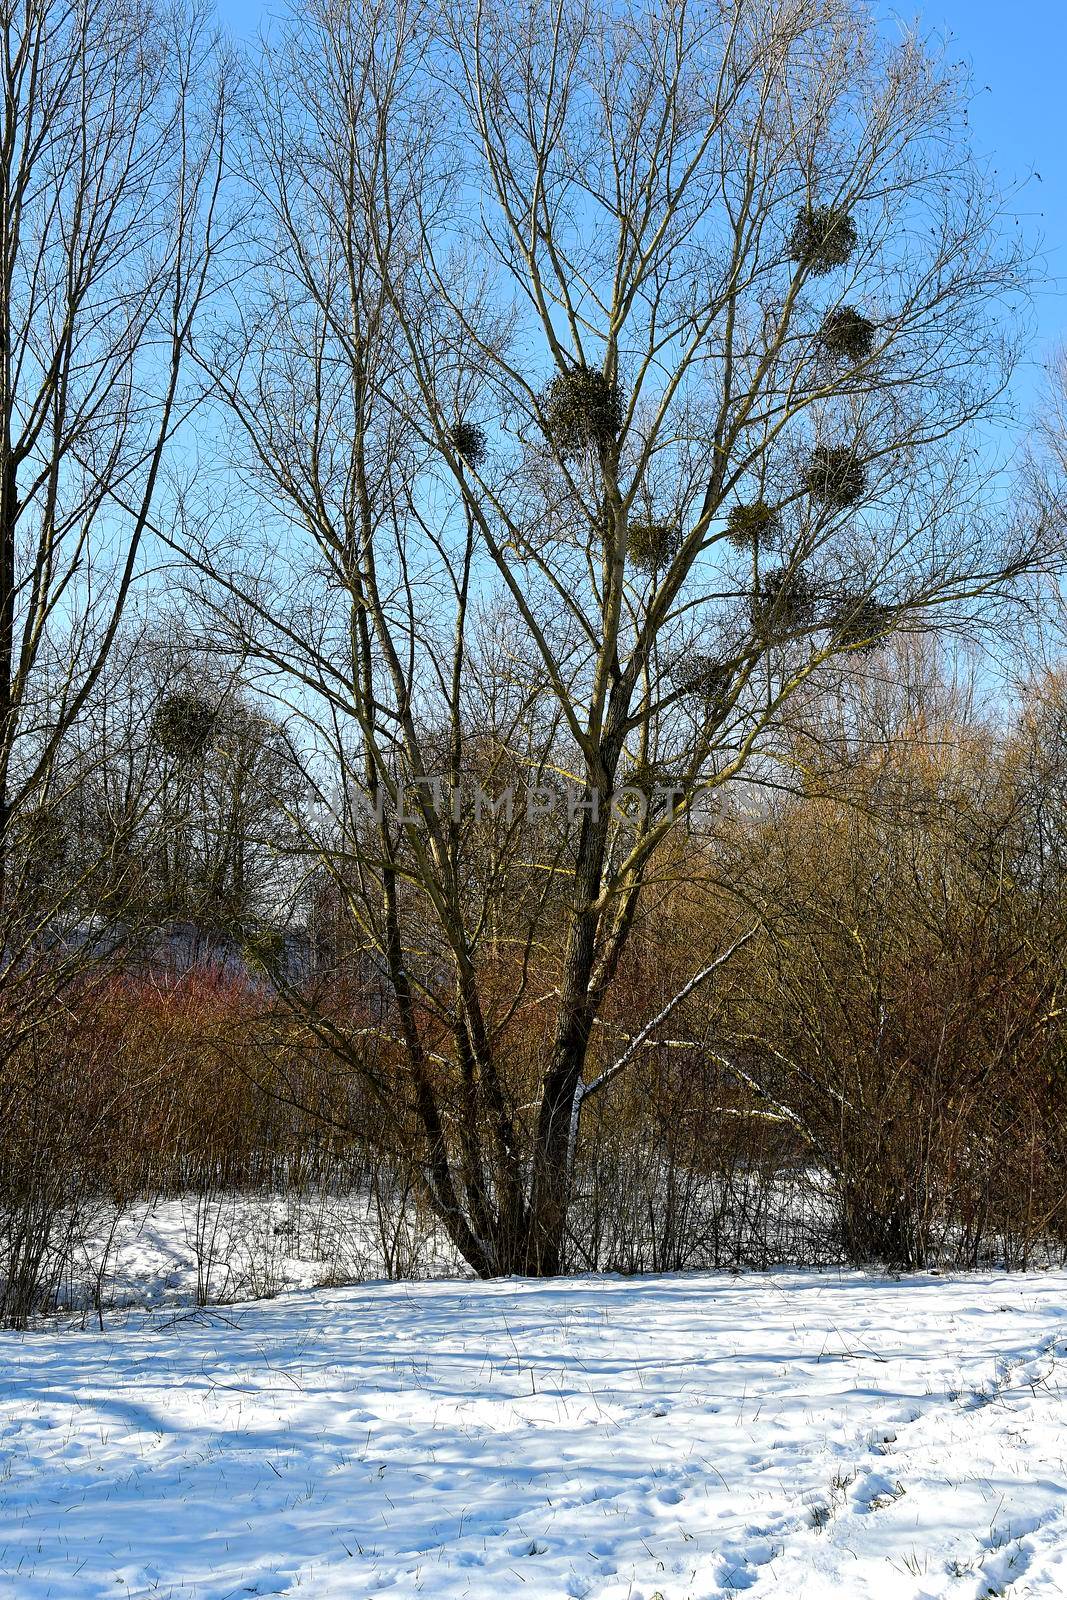 mistletoe with ripe berries in wintertime in Germany